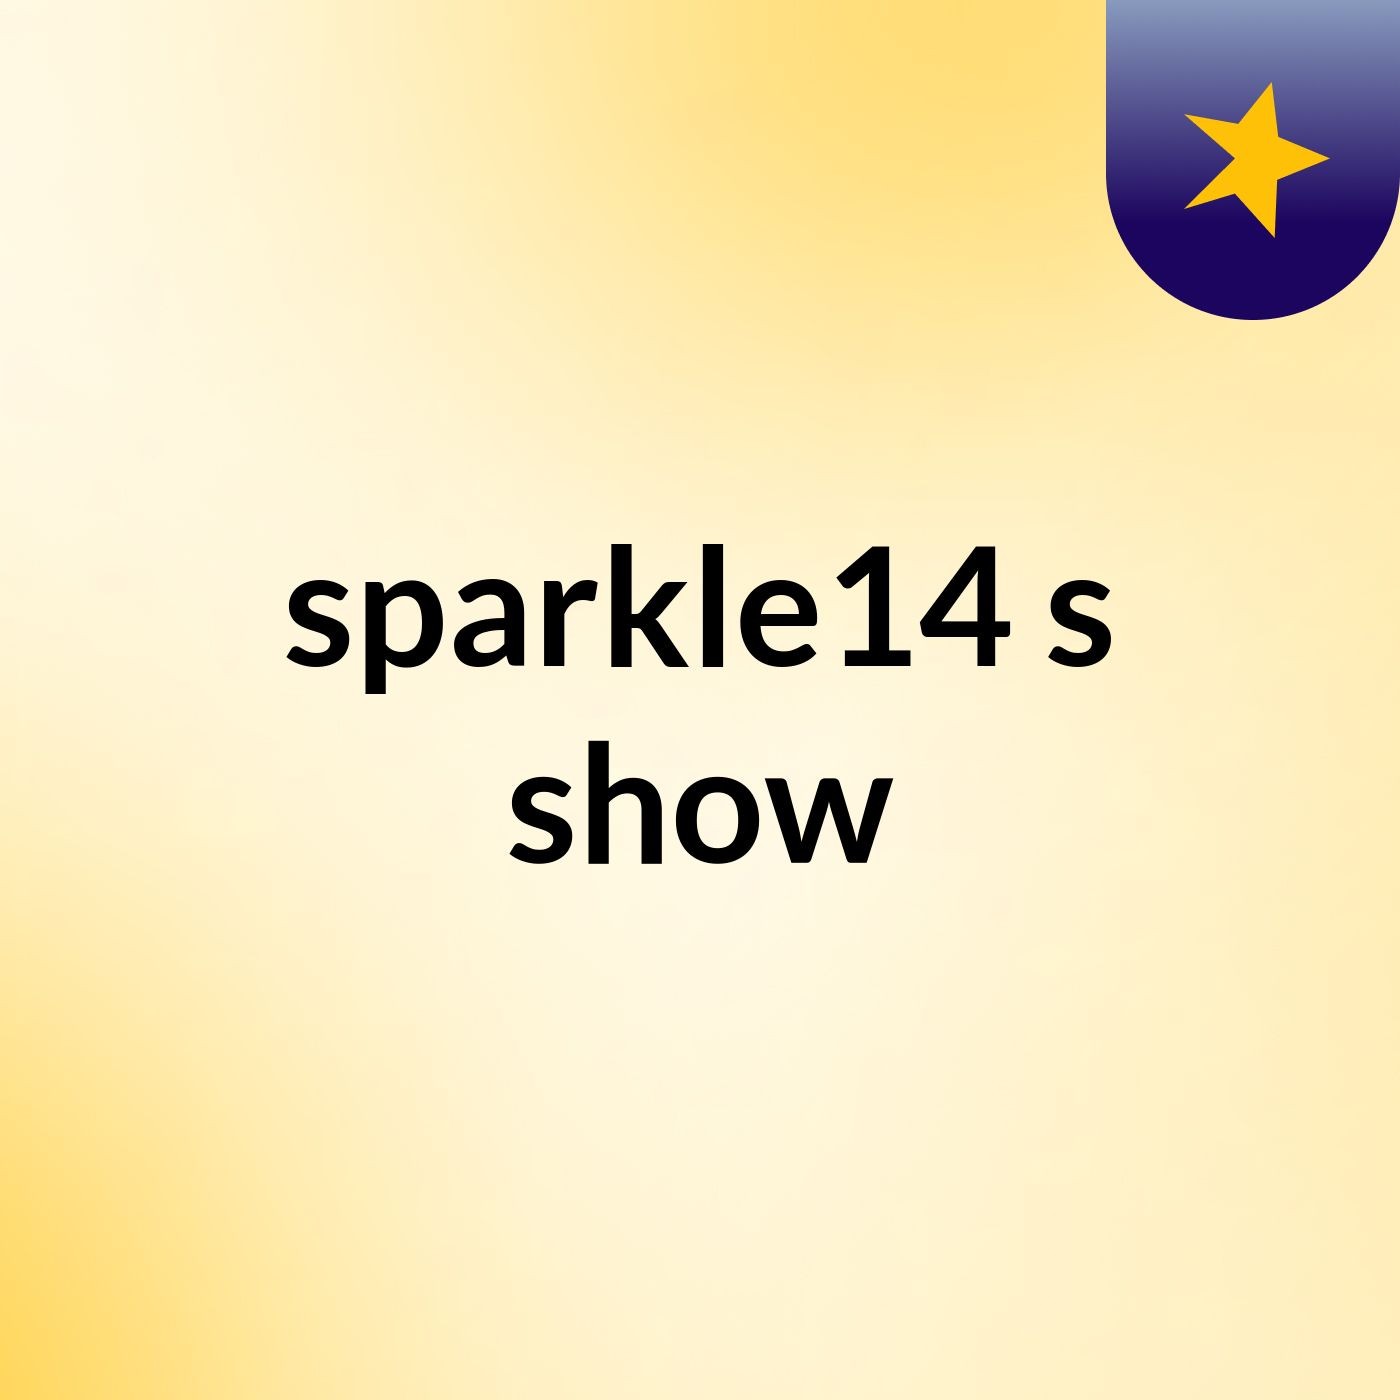 sparkle14's show